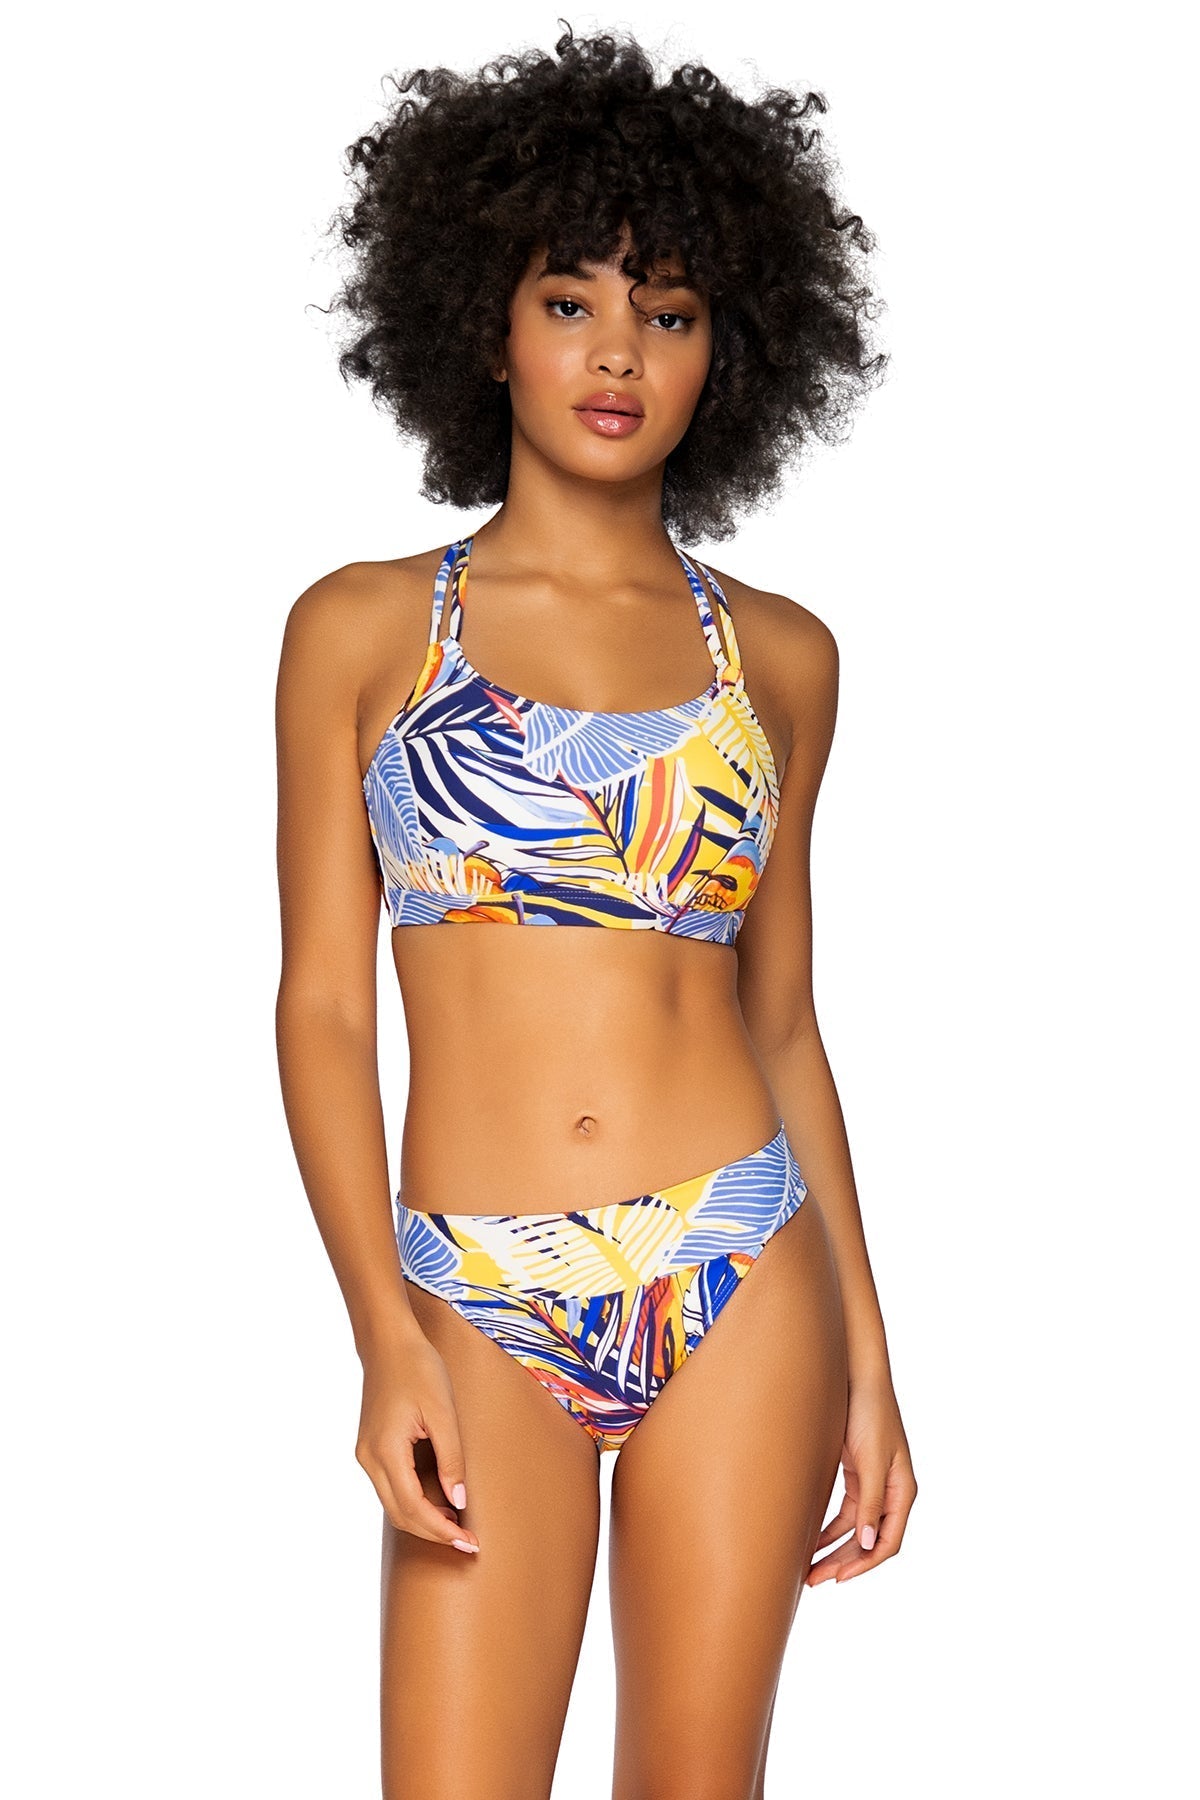 Sunsets "Brands,Swimwear" 32D/34C / BAHBR / 56 Sunsets Bahama Breeze Taylor Bralette